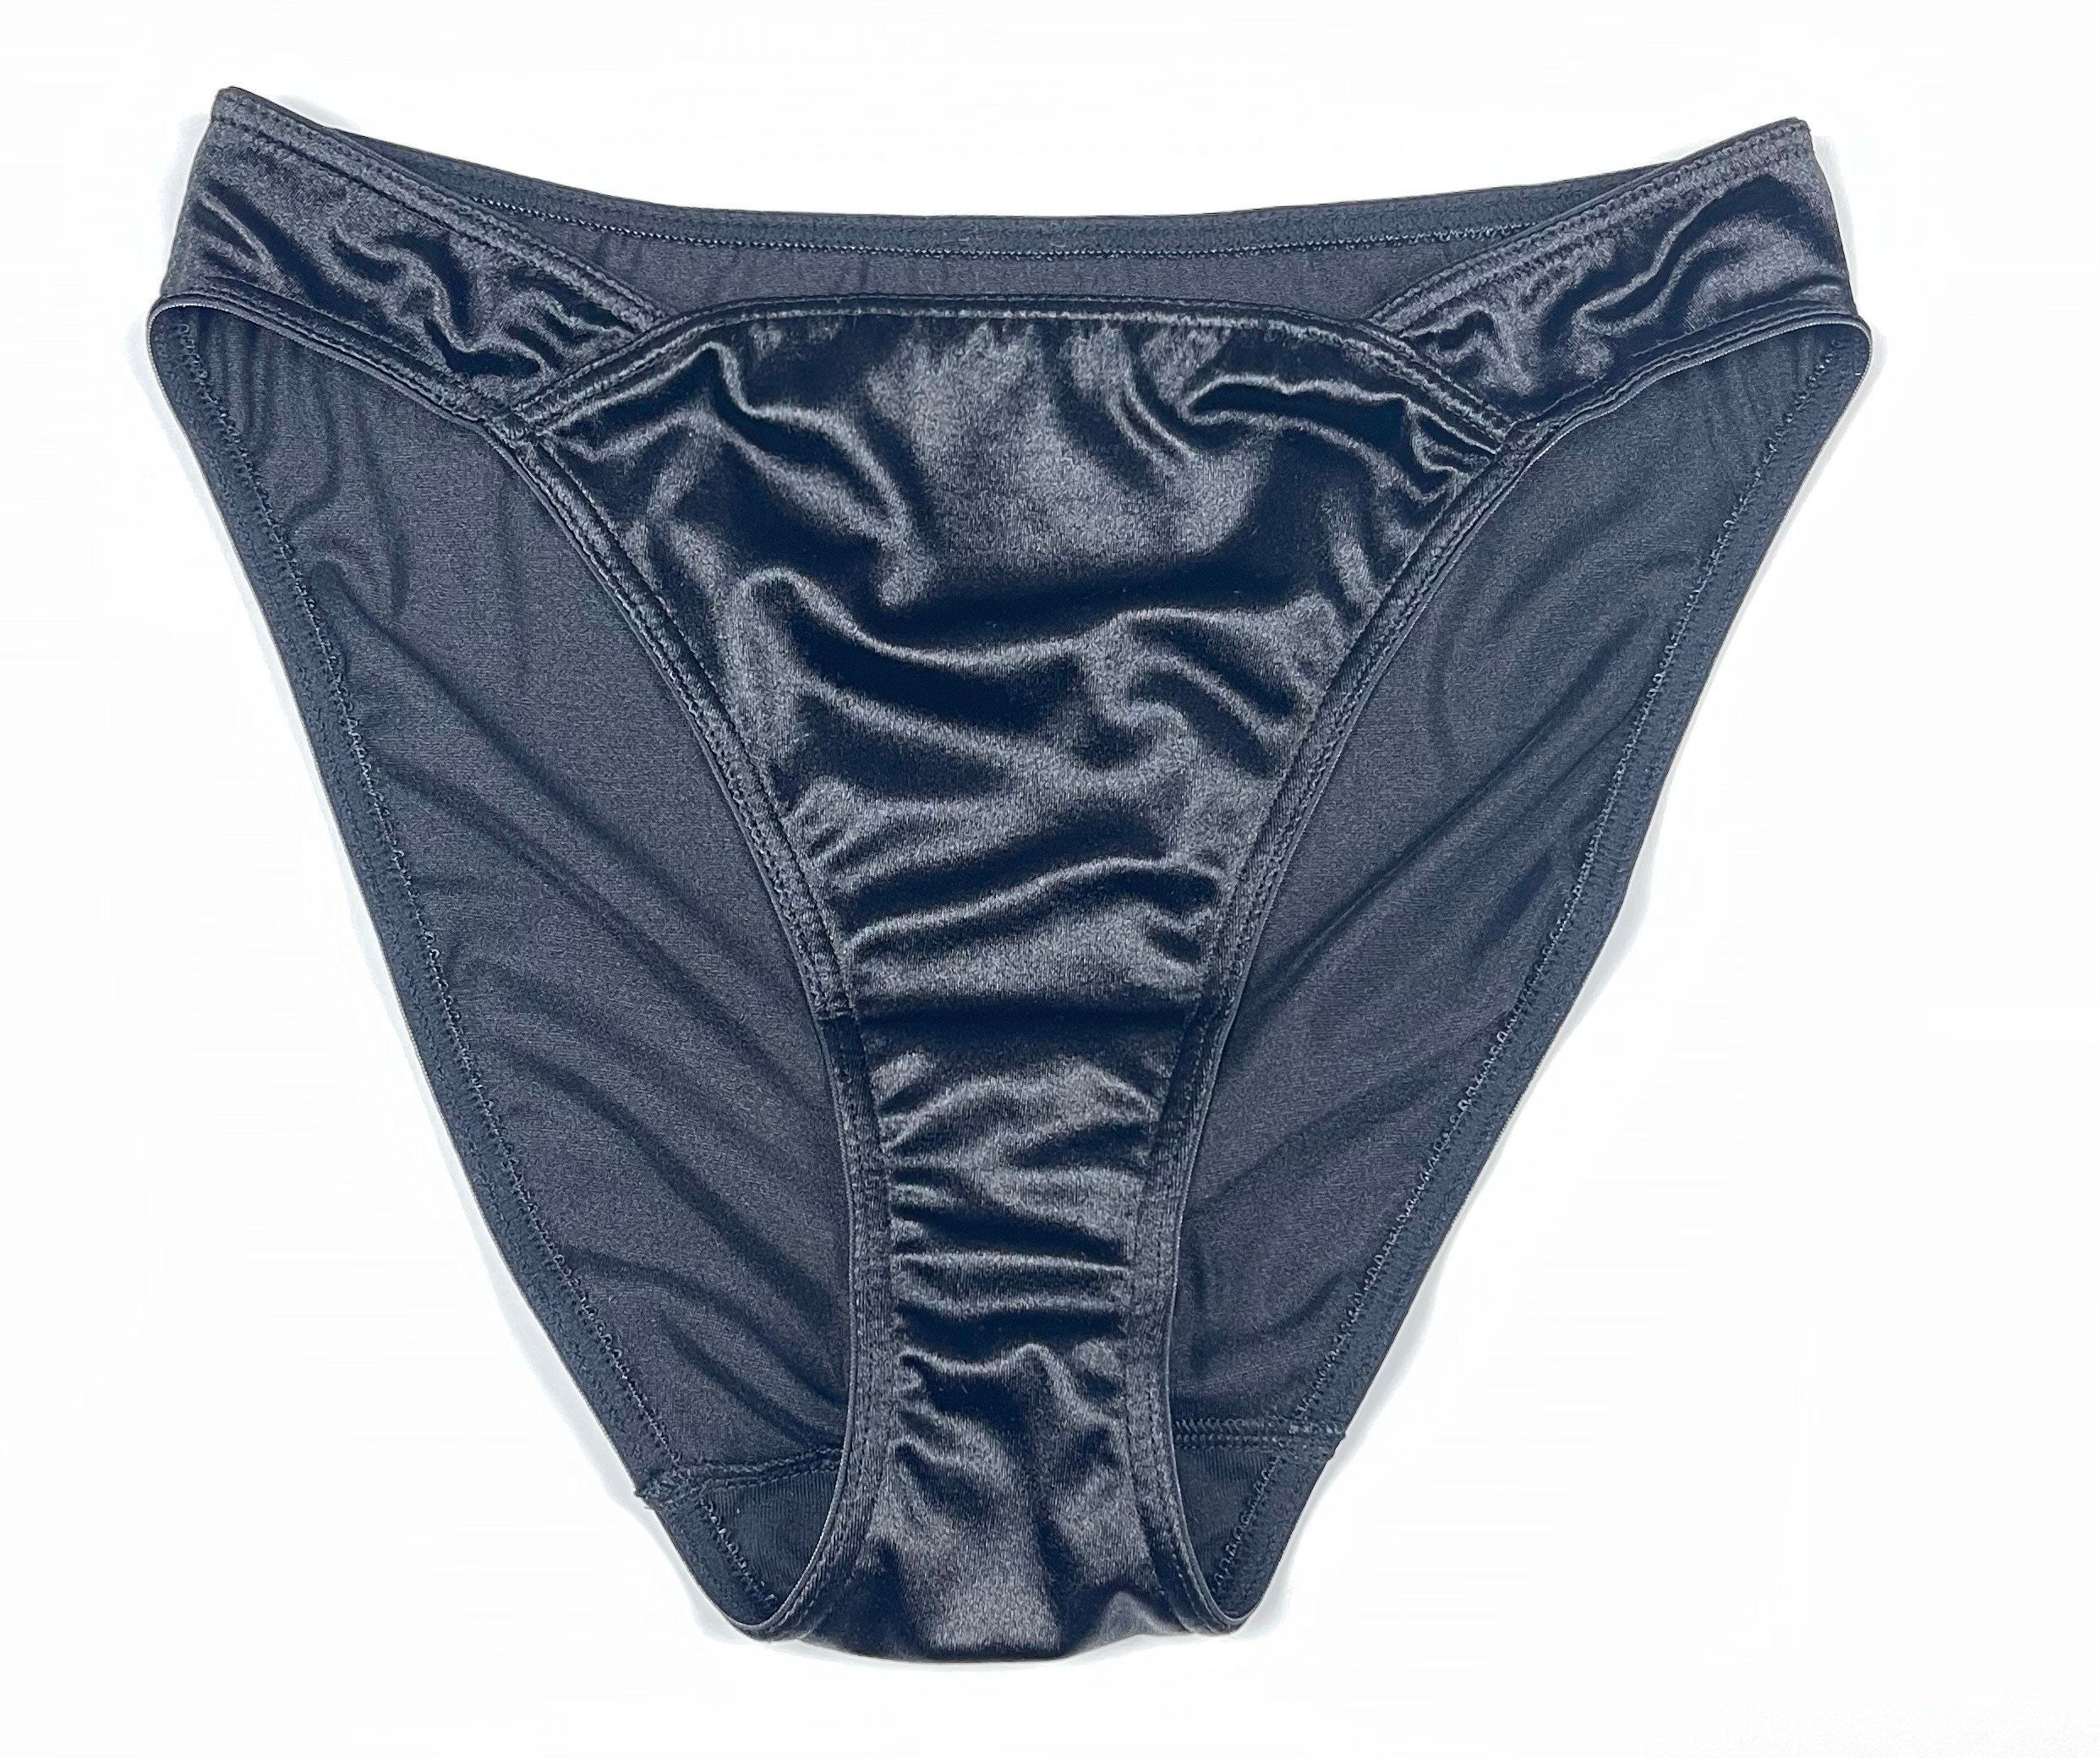 High Leg Vintage Panty Transparent Underwear See Through Lace